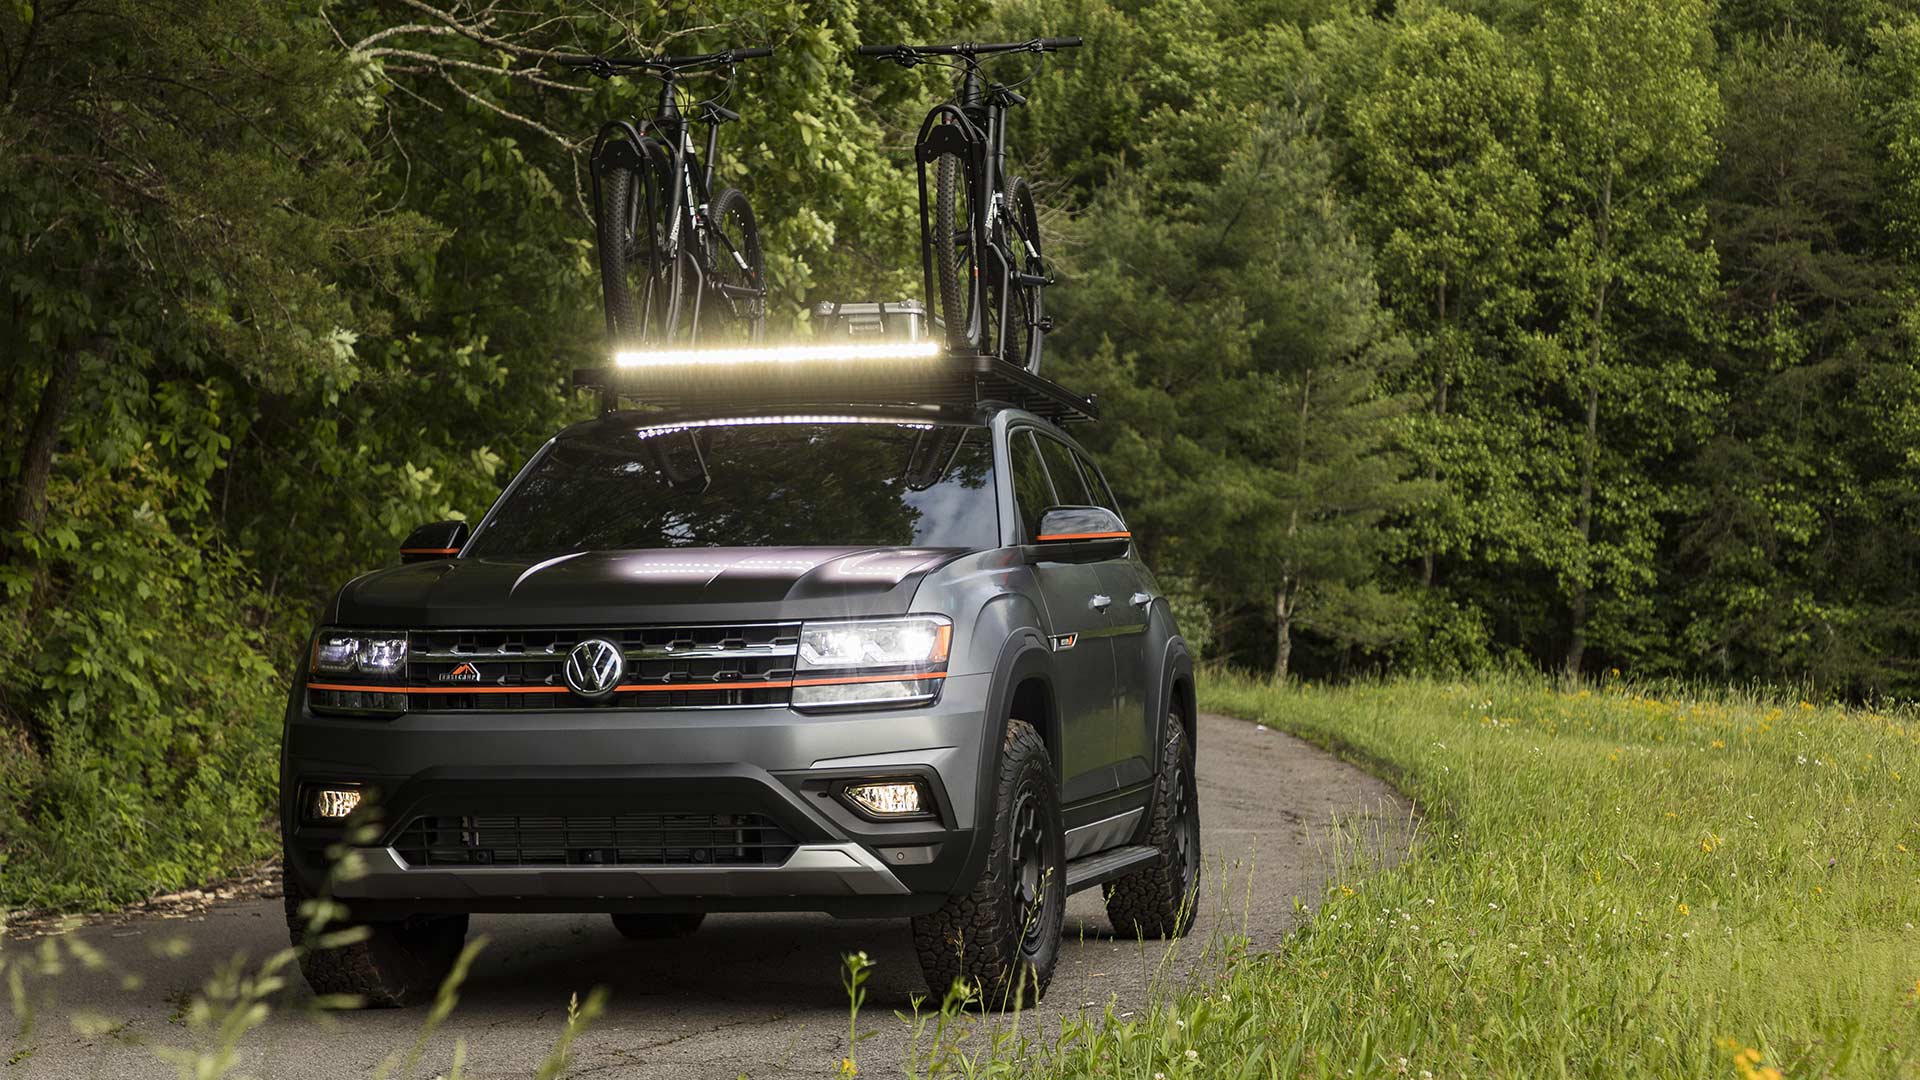 2019 Volkswagen USA Enthusiast Concept Fleet